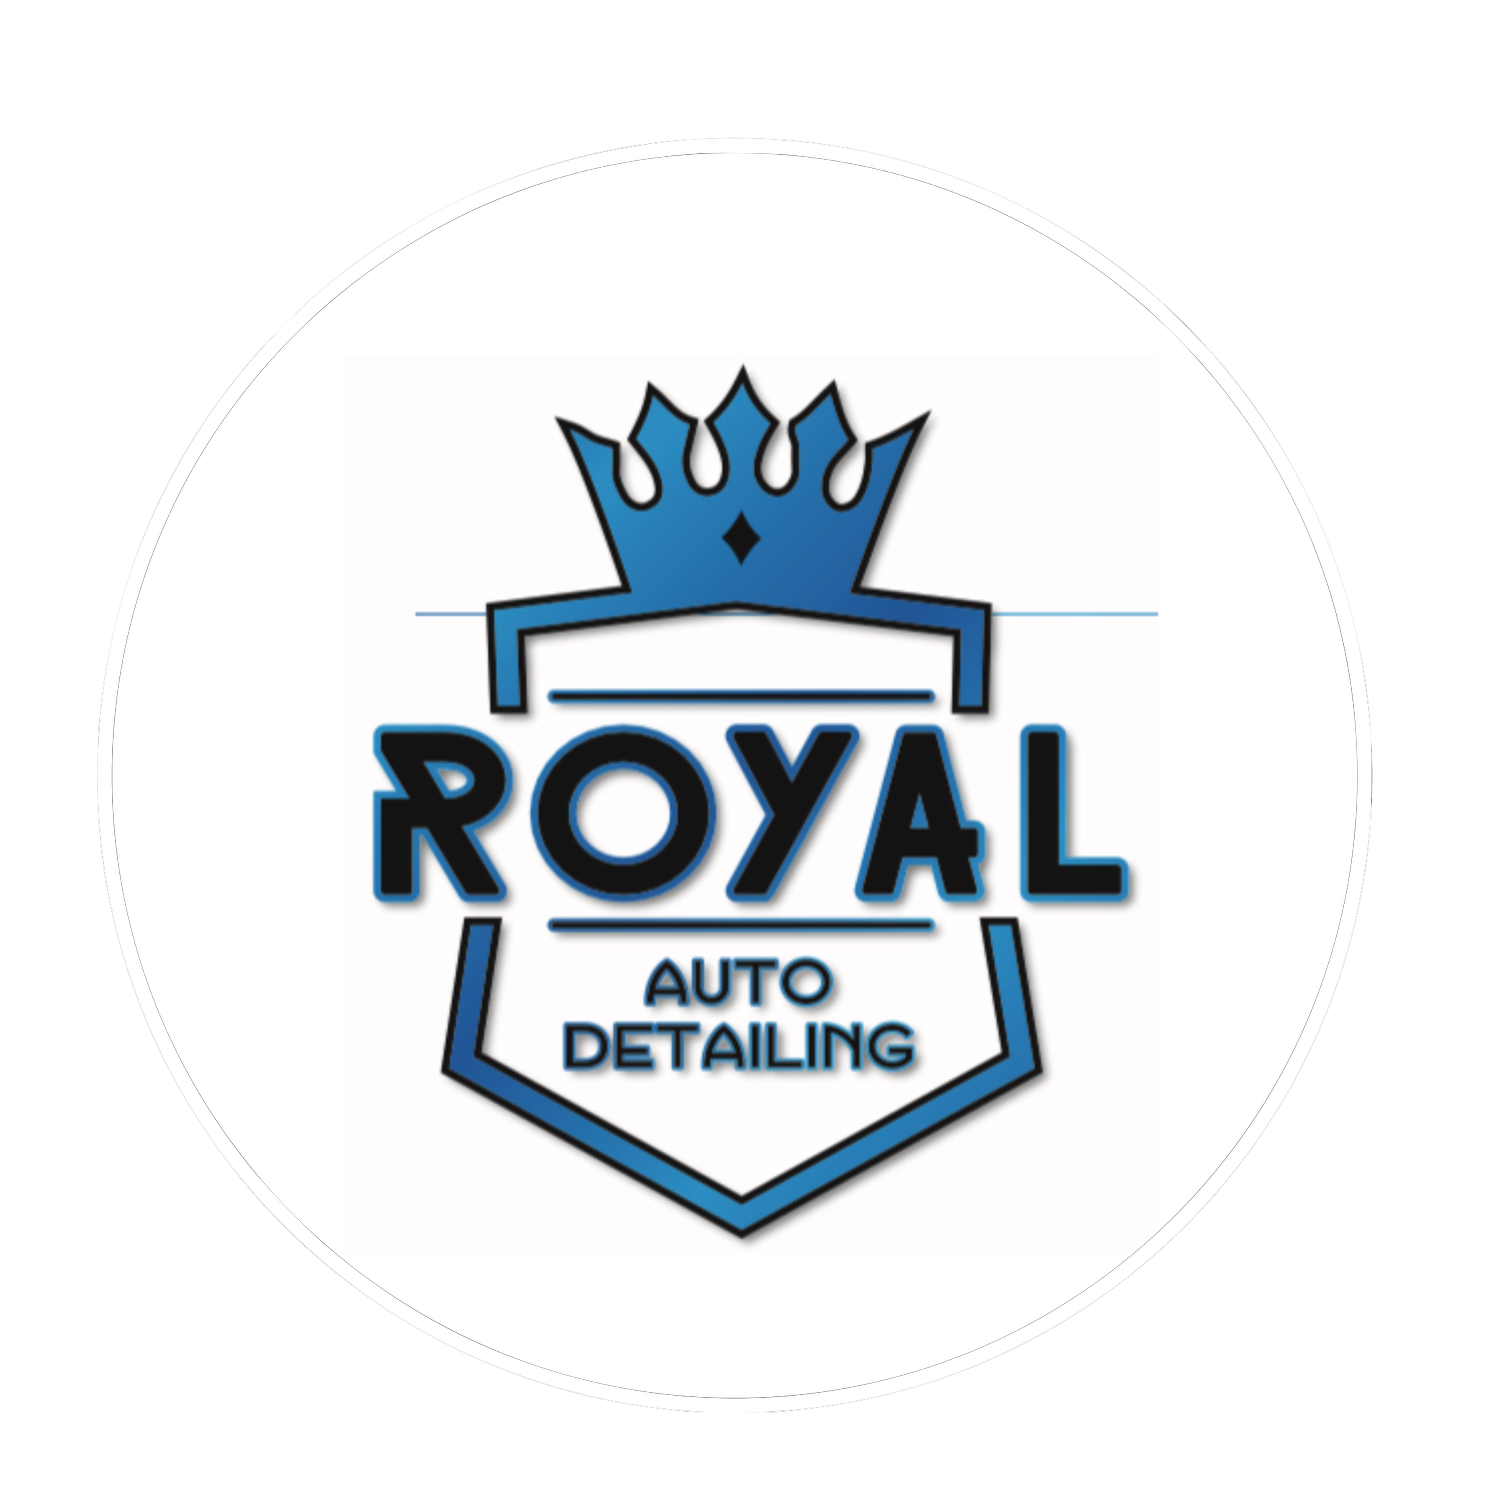 Royal Auto Detailing